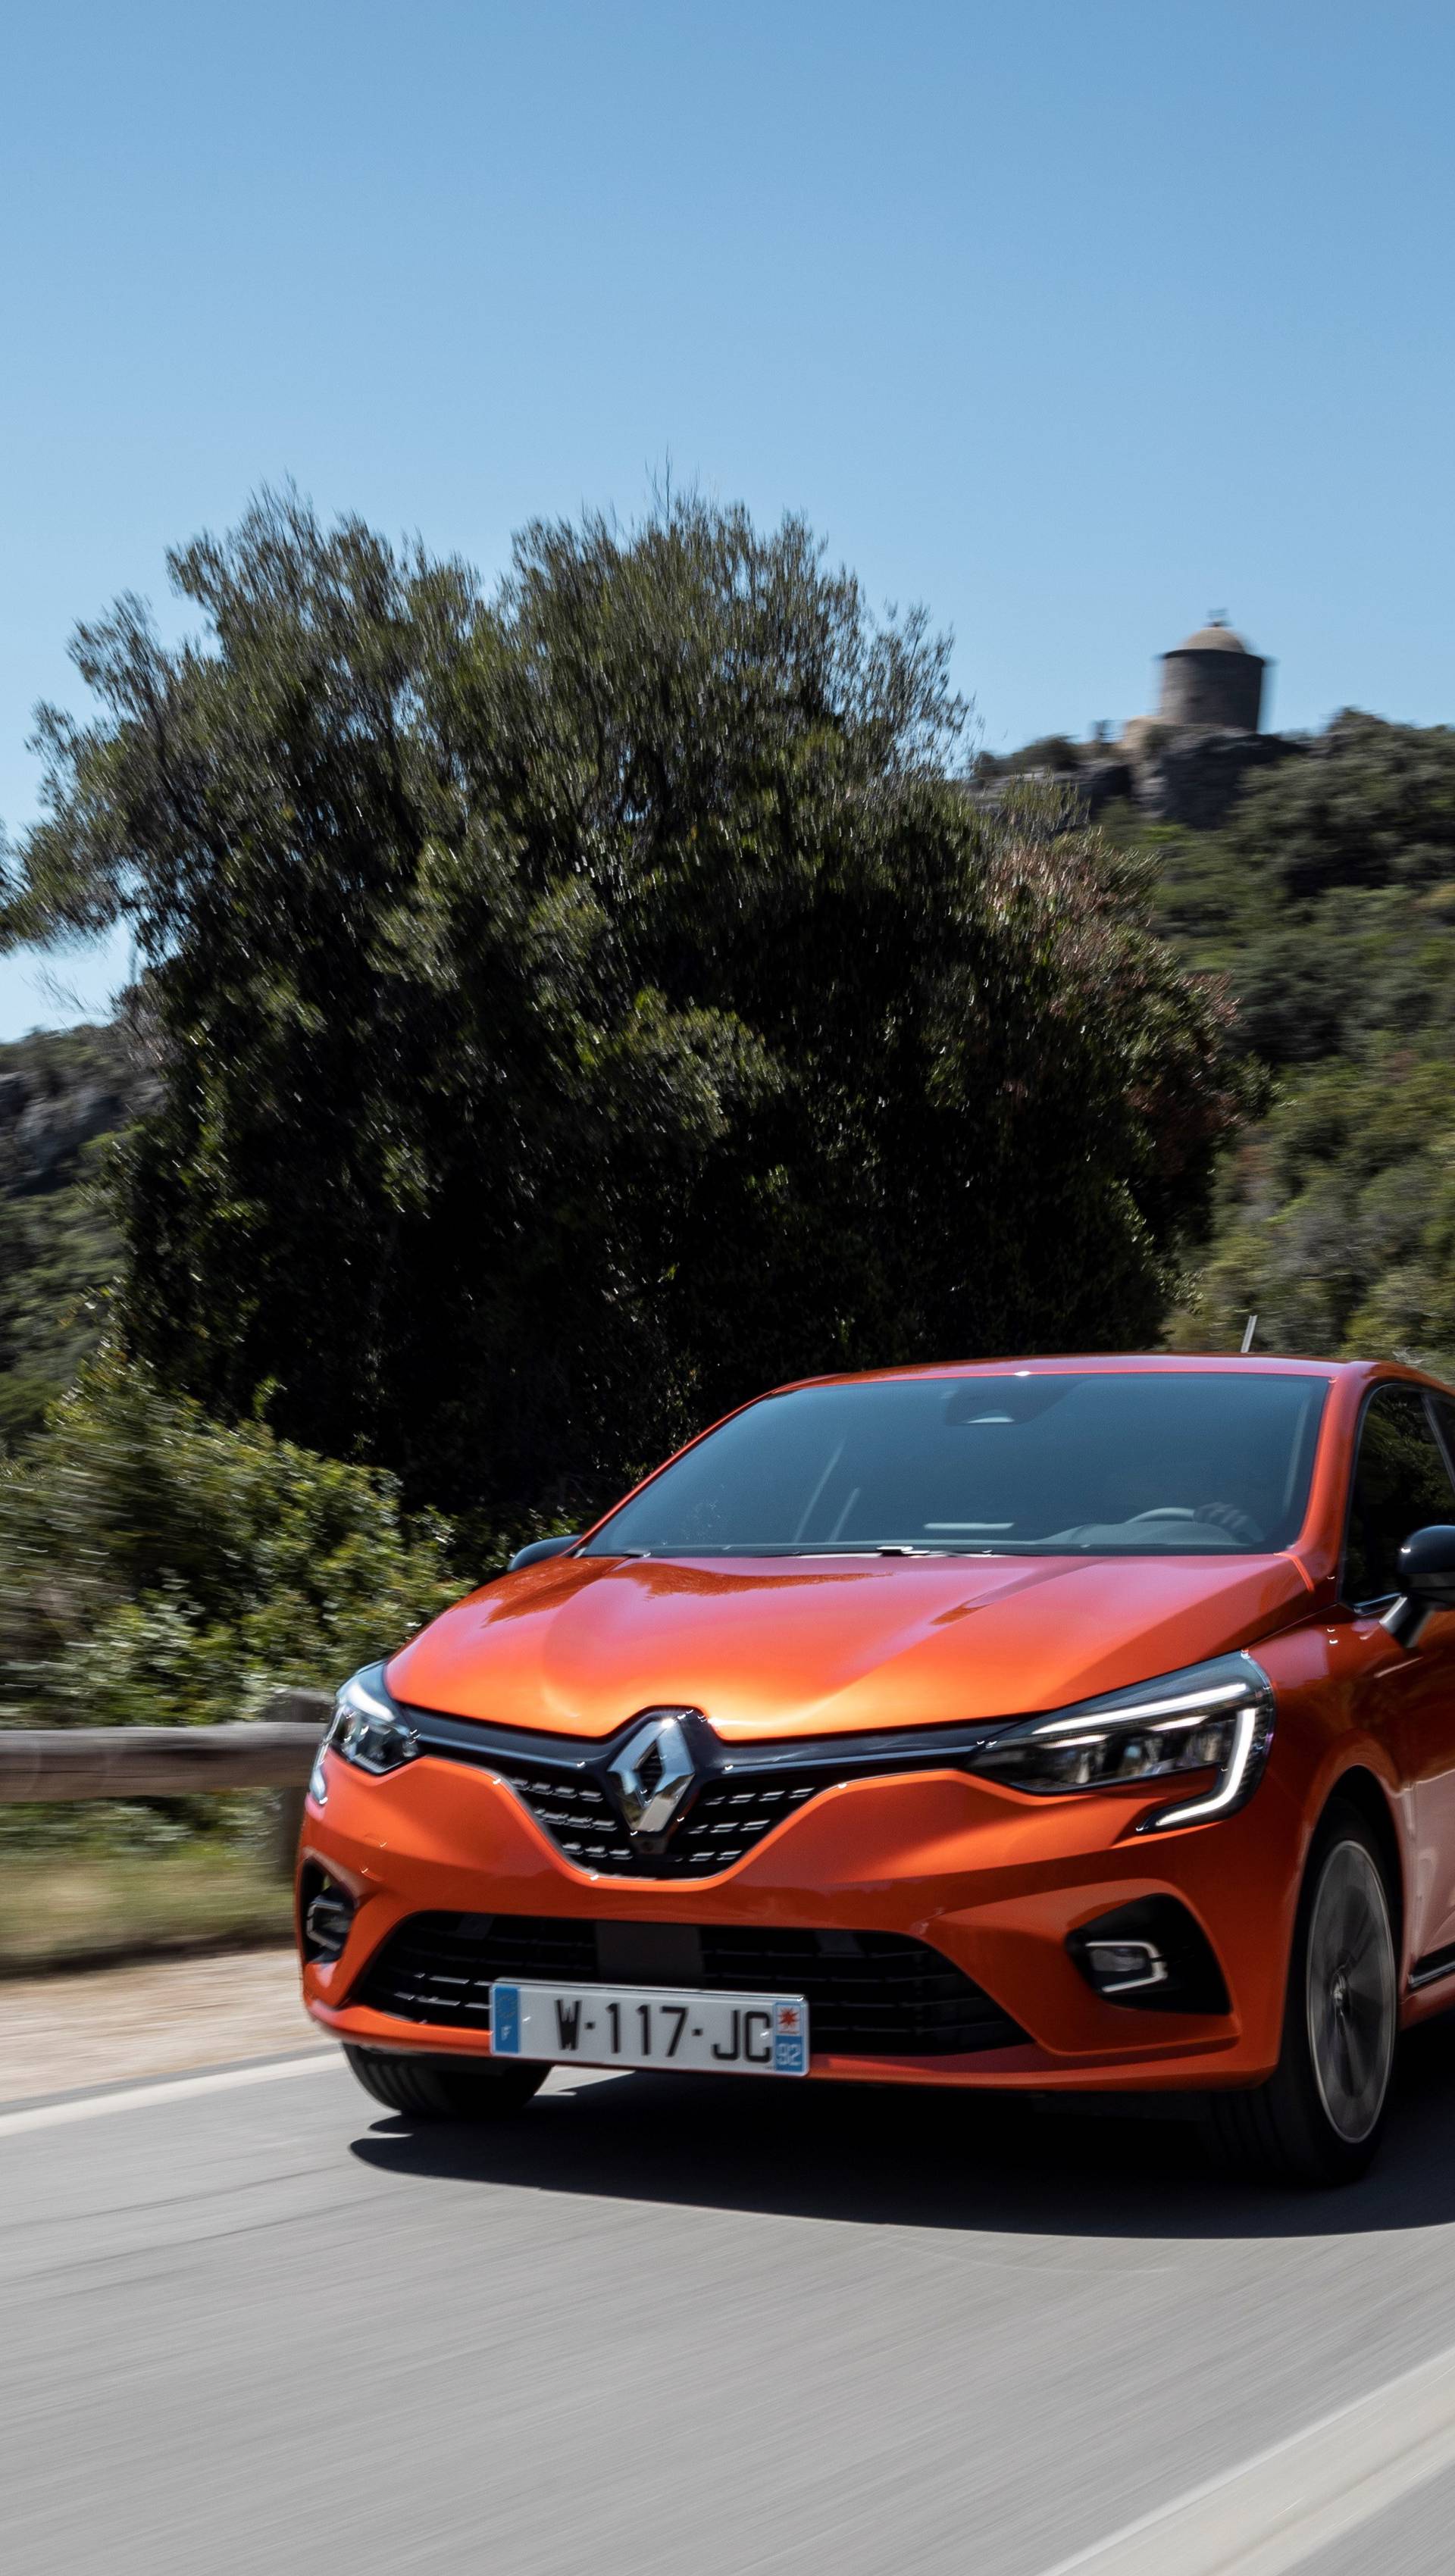 2019 - Essai presse Nouvelle Renault CLIO au Portugal